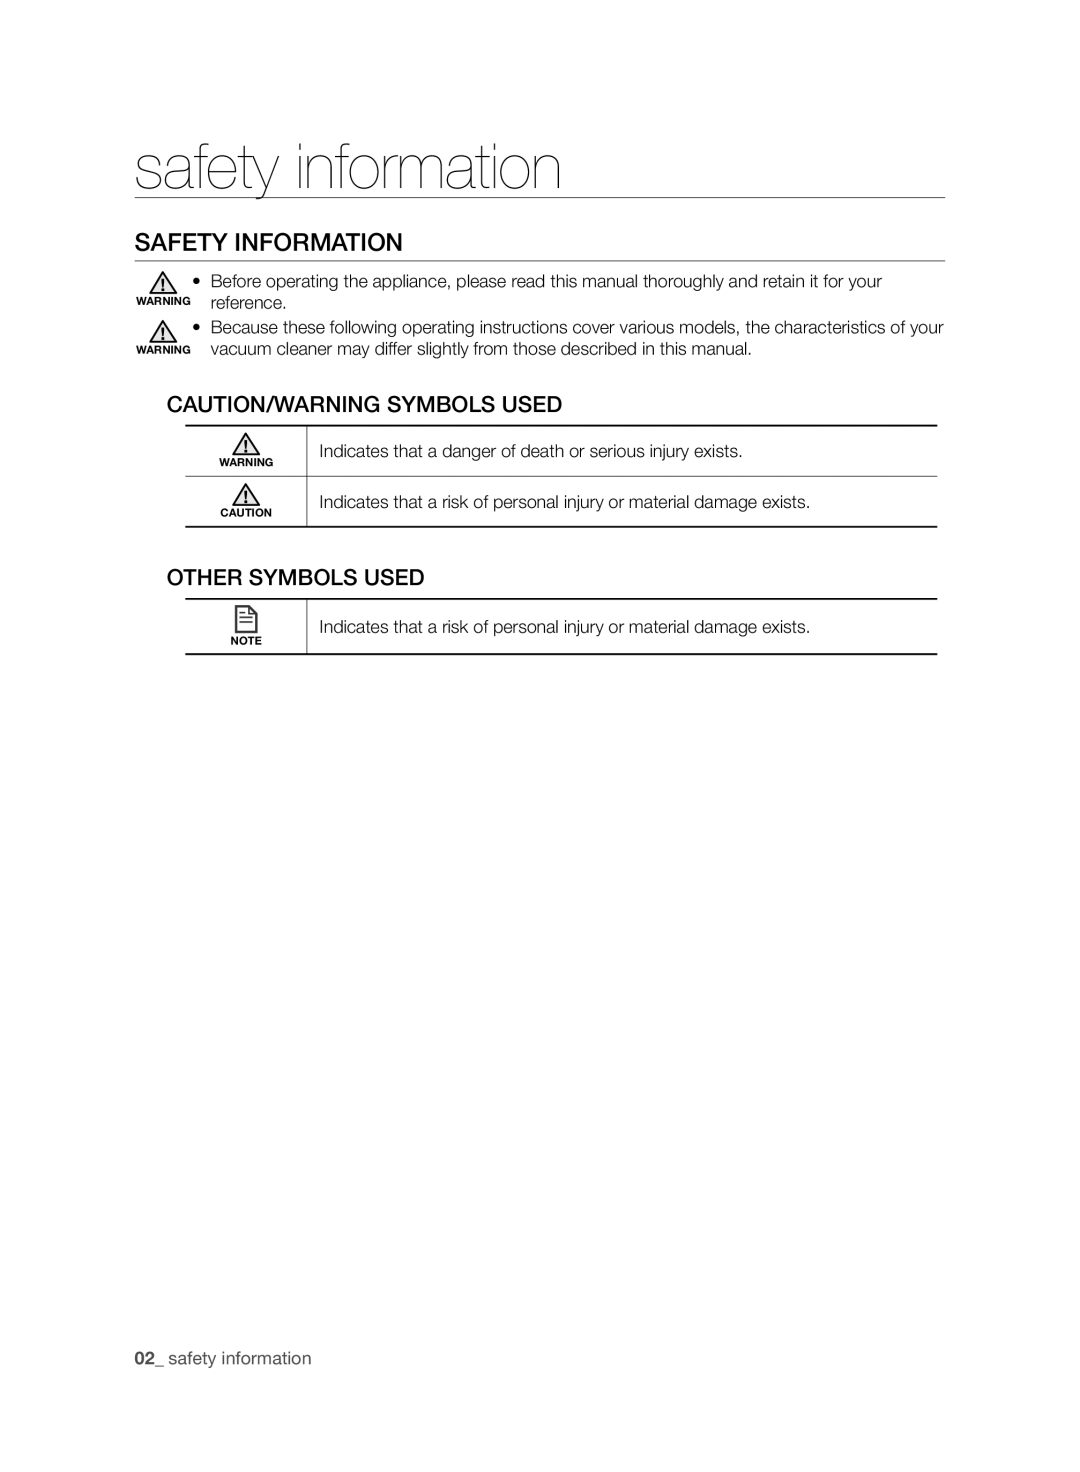 Samsung VCR8950L3B/XEO manual safety information, Safety Information, Caution/Warning Symbols Used, Other Symbols Used 